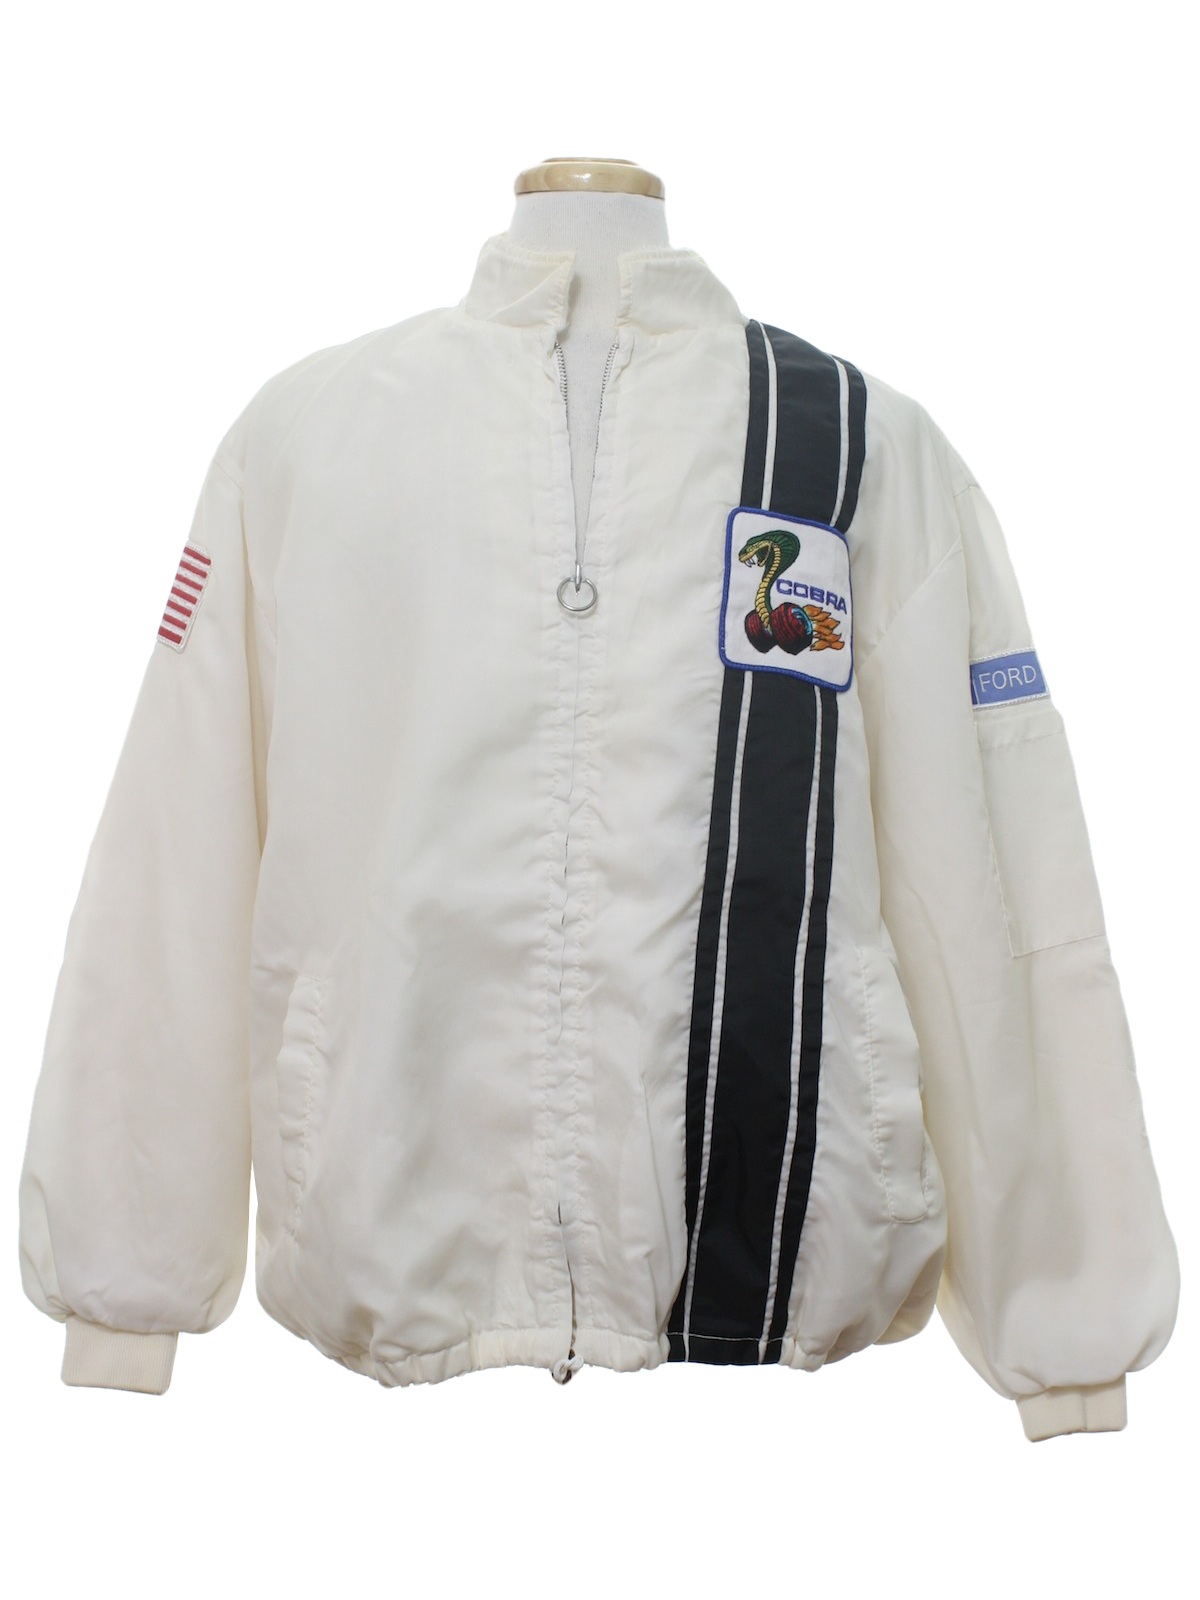 Mel Nick 80's Vintage Jacket: 80s -Mel Nick- Mens white and black nylon ...